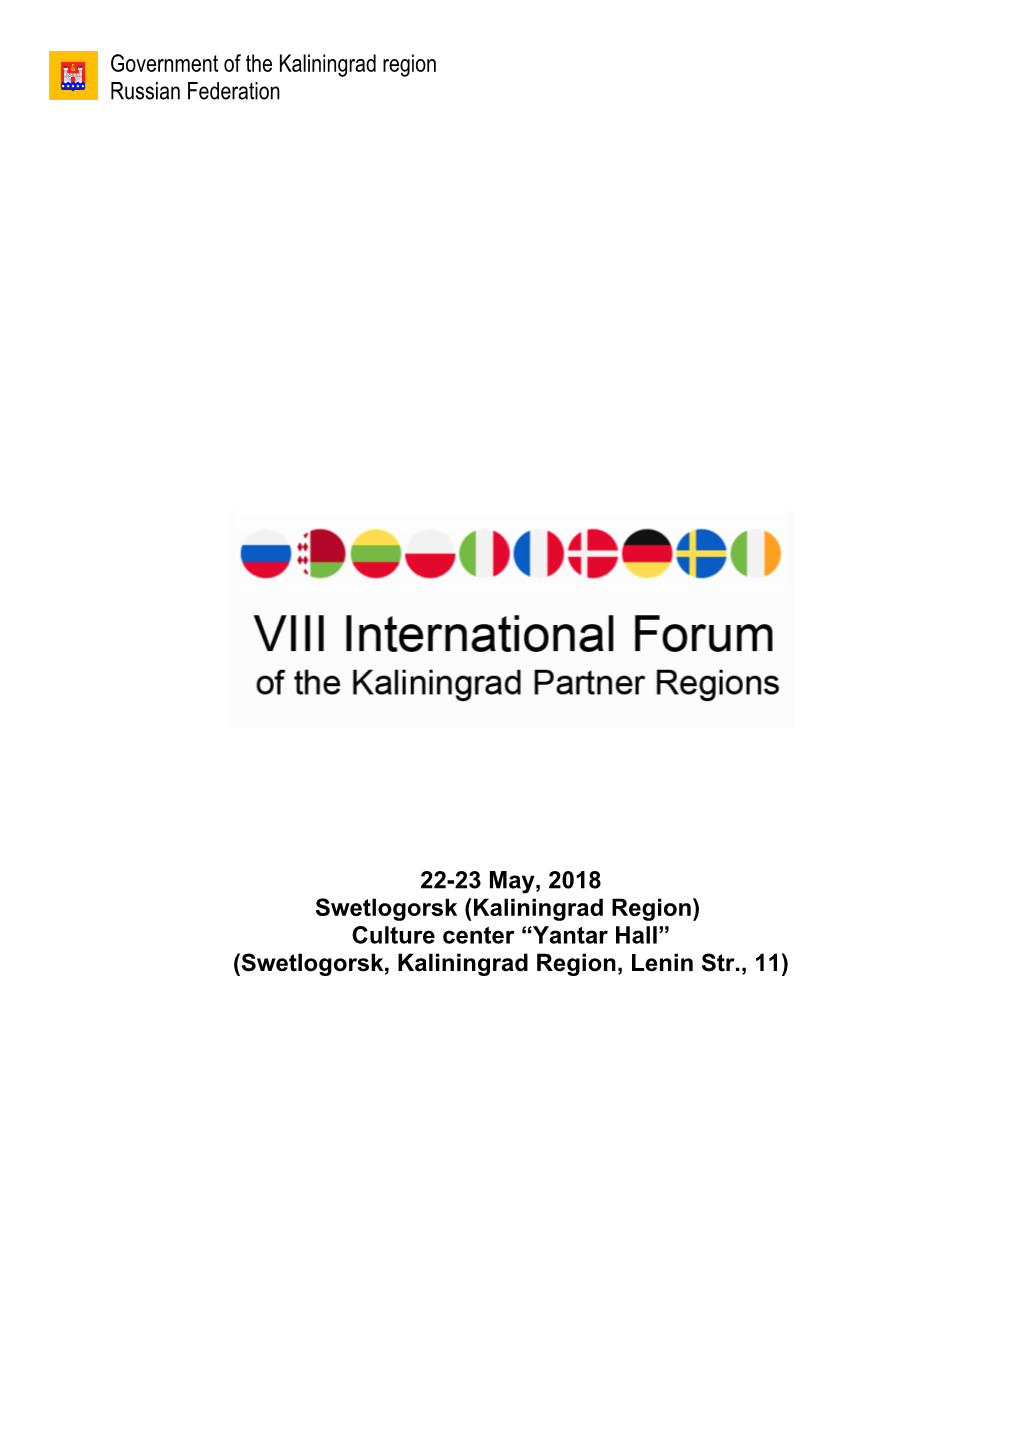 Government of the Kaliningrad Region Russian Federation 22-23 May